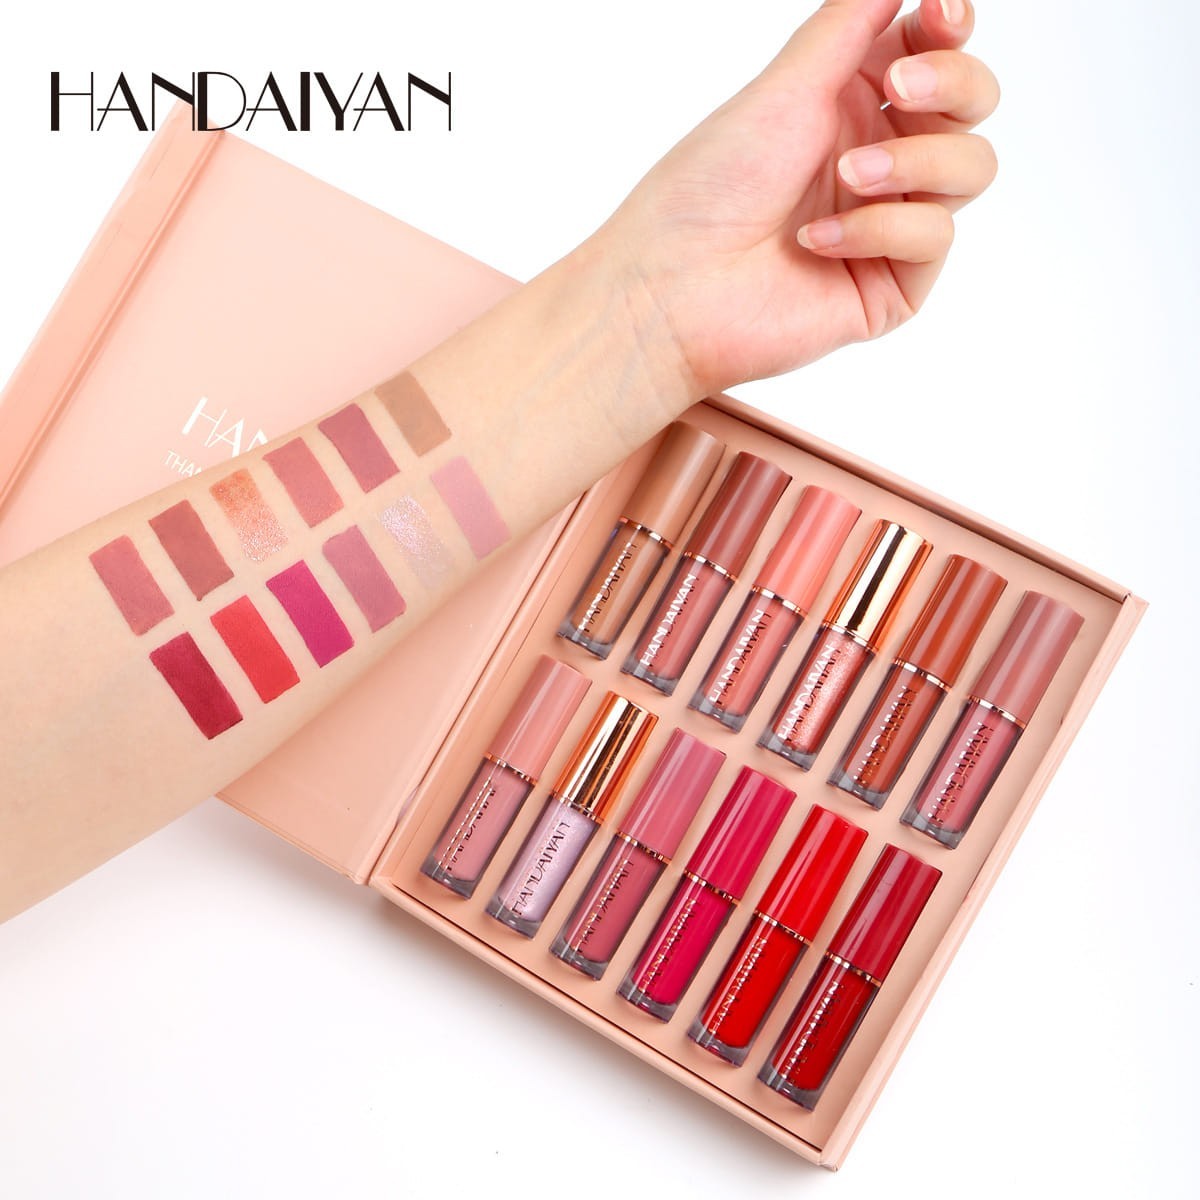 Handaiyan 12 Color Matte Liquid Lipstick Set